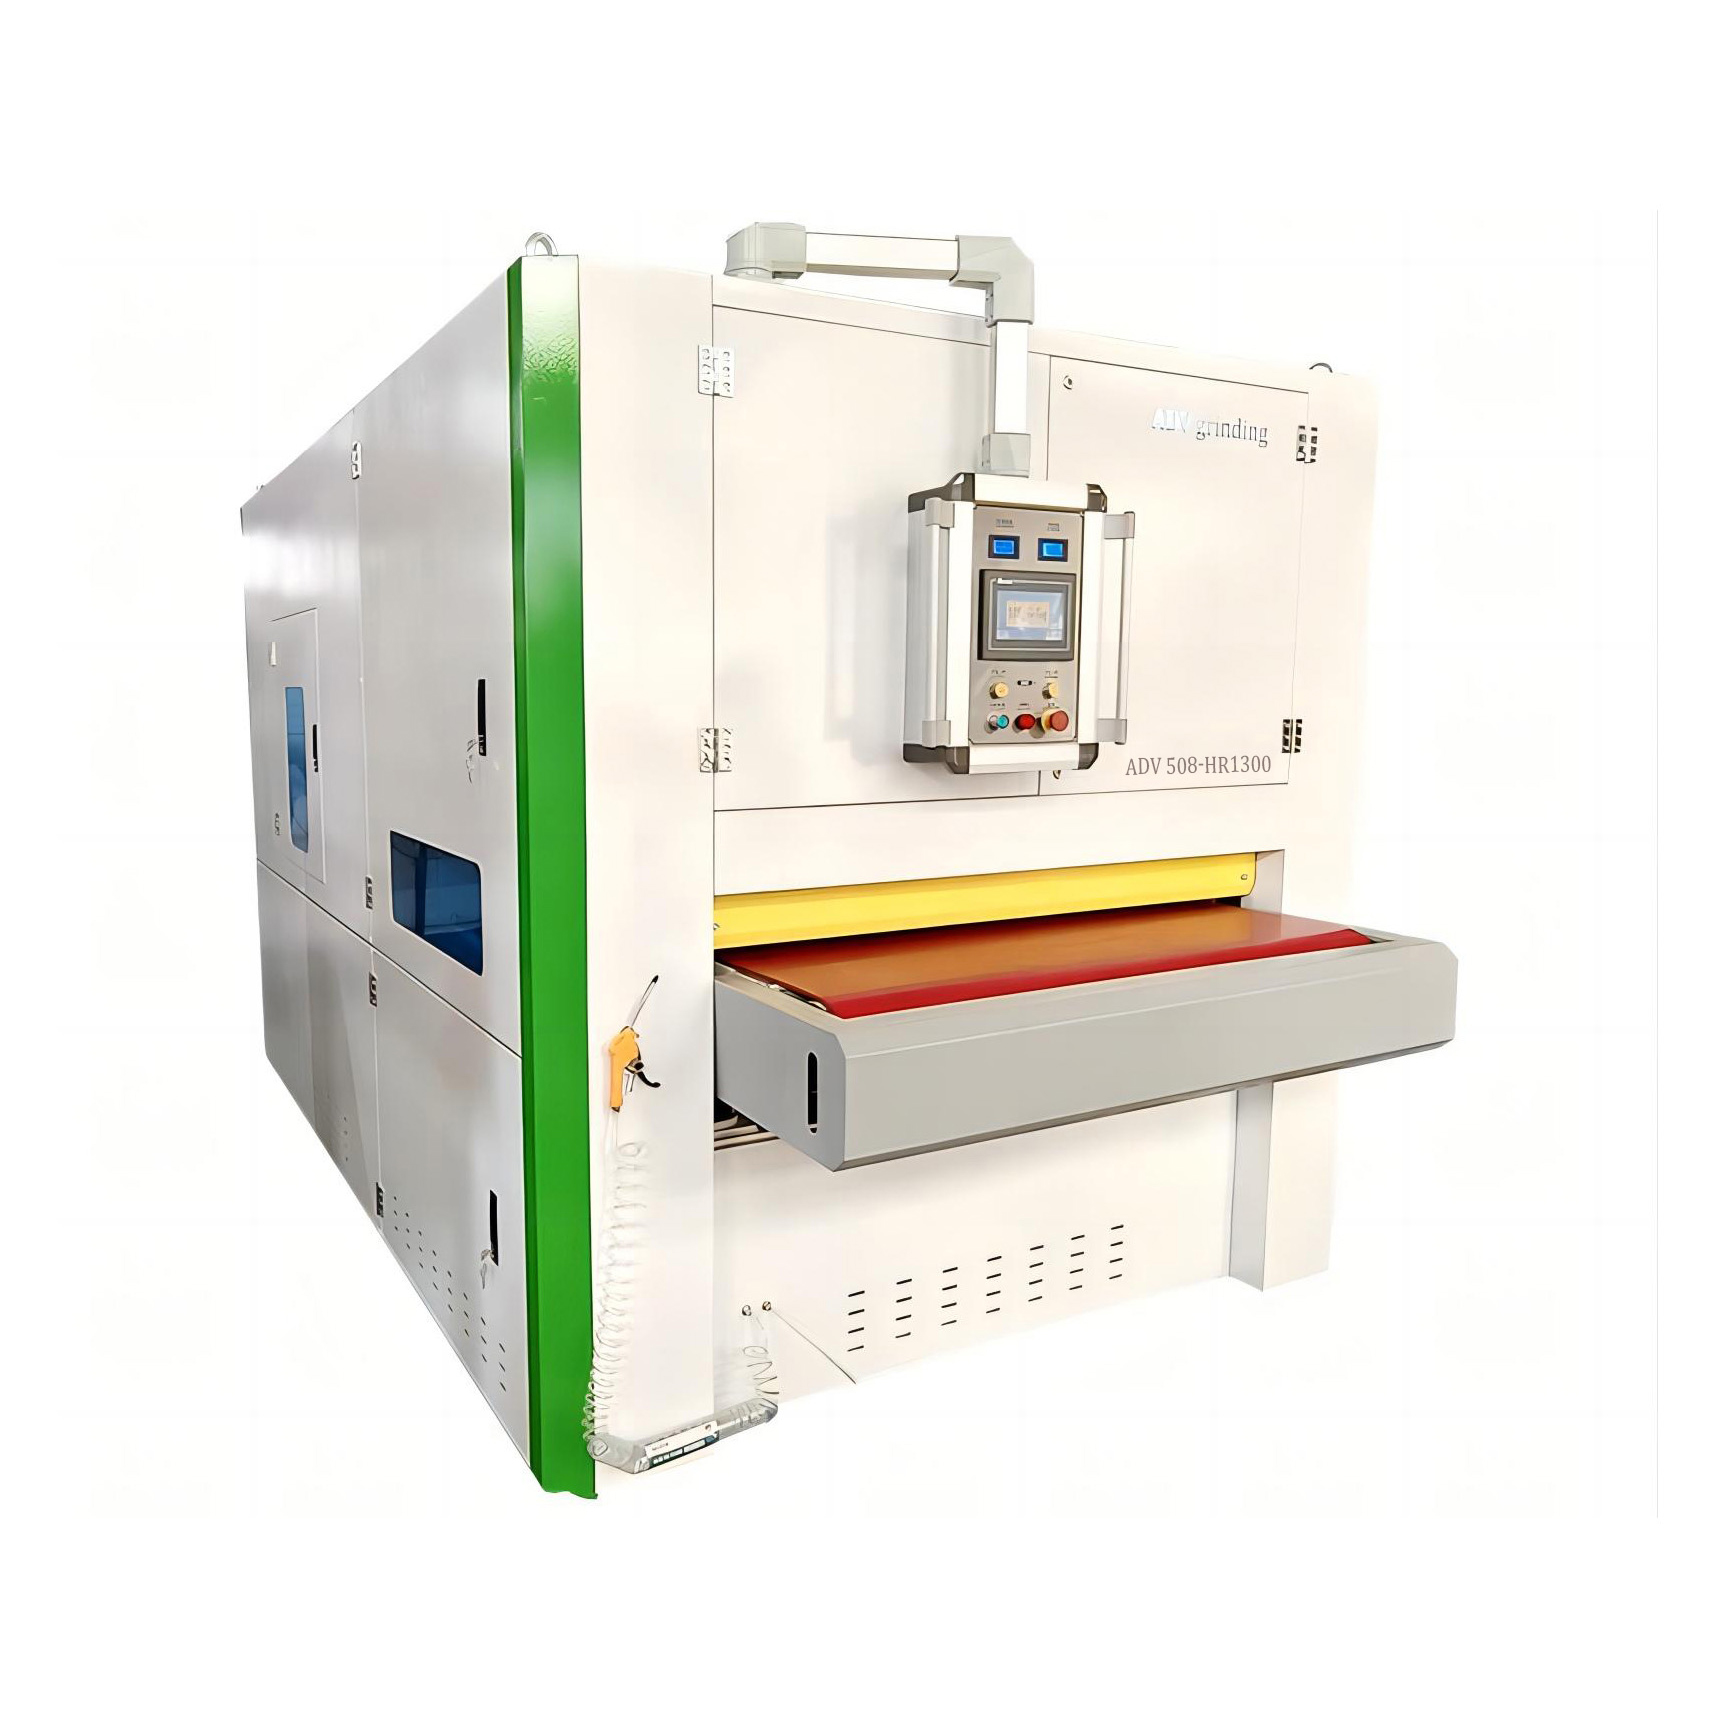 Industrial Aesthetics of Metal Sheet: ADV 508-RW Deburring Machine Polishing Exquisite Details in Laser-Cut Precision